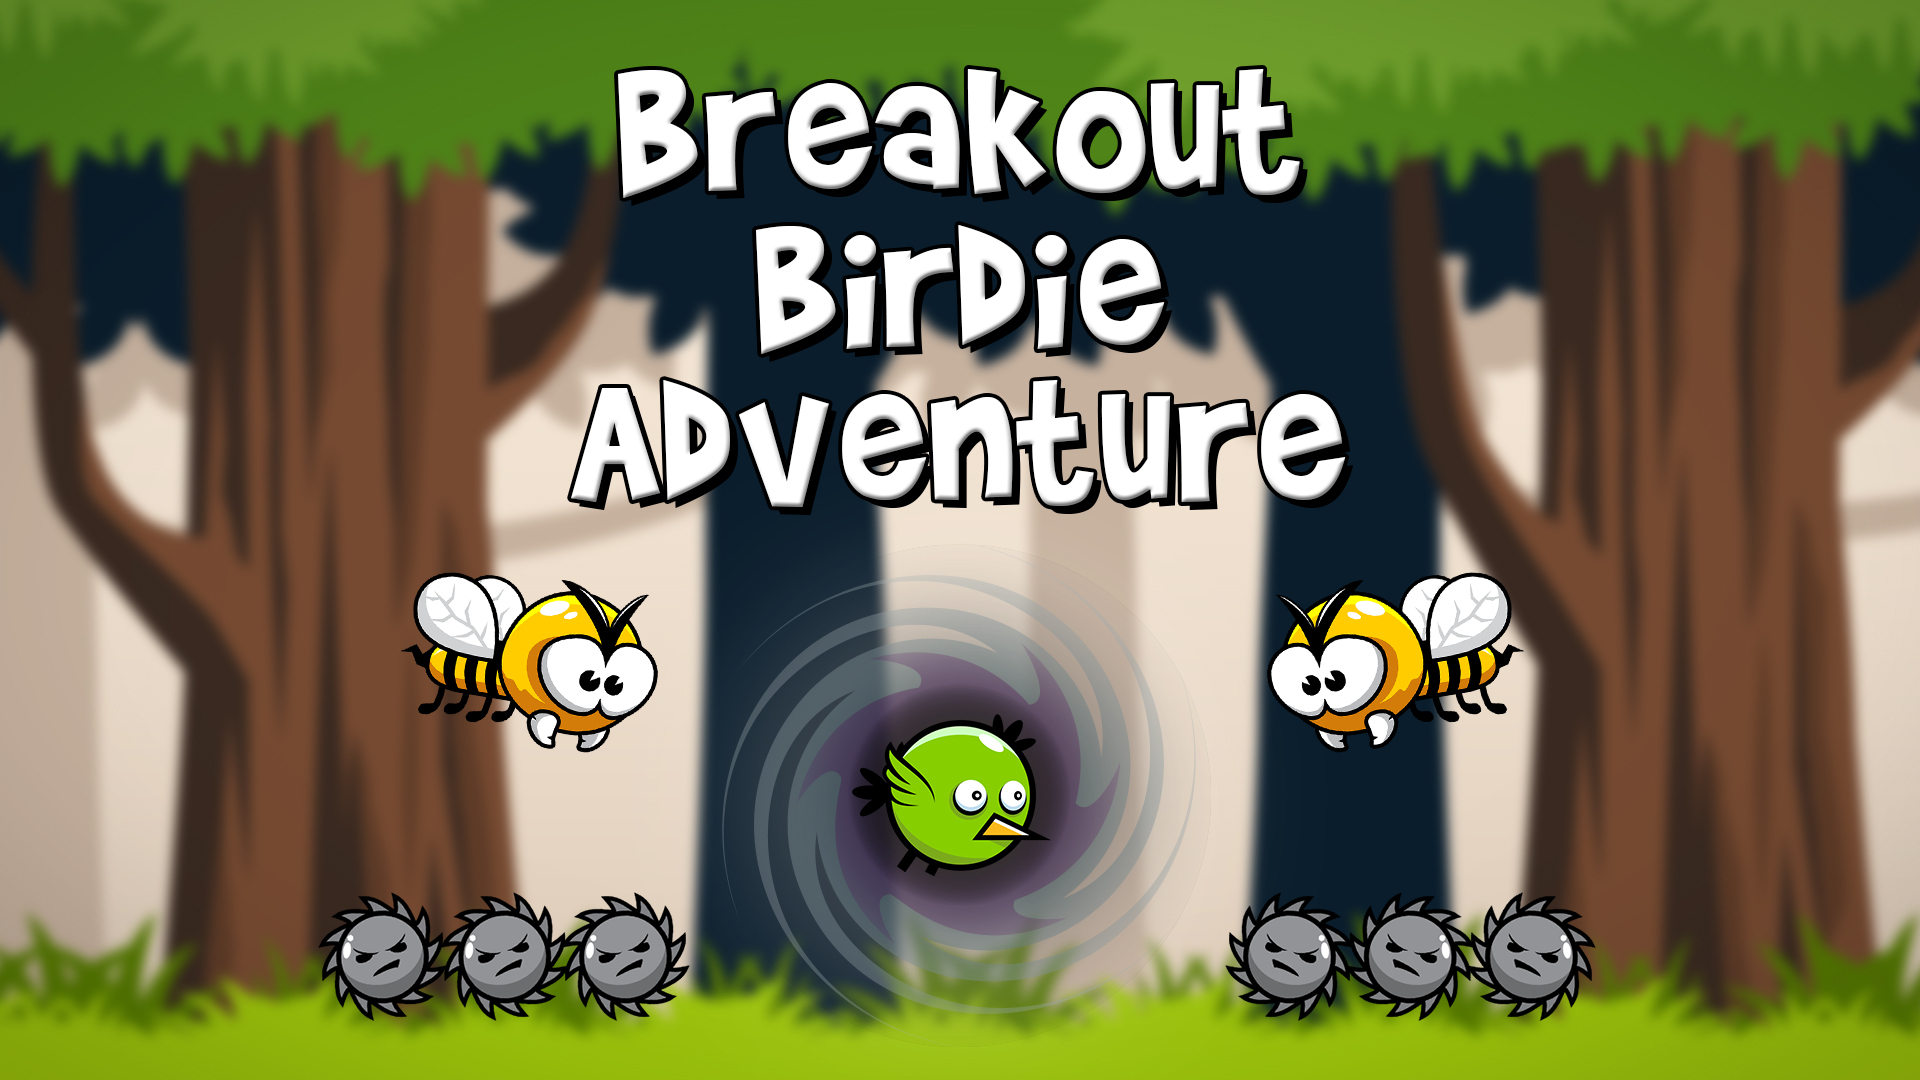 Breakout Birdie Adventure